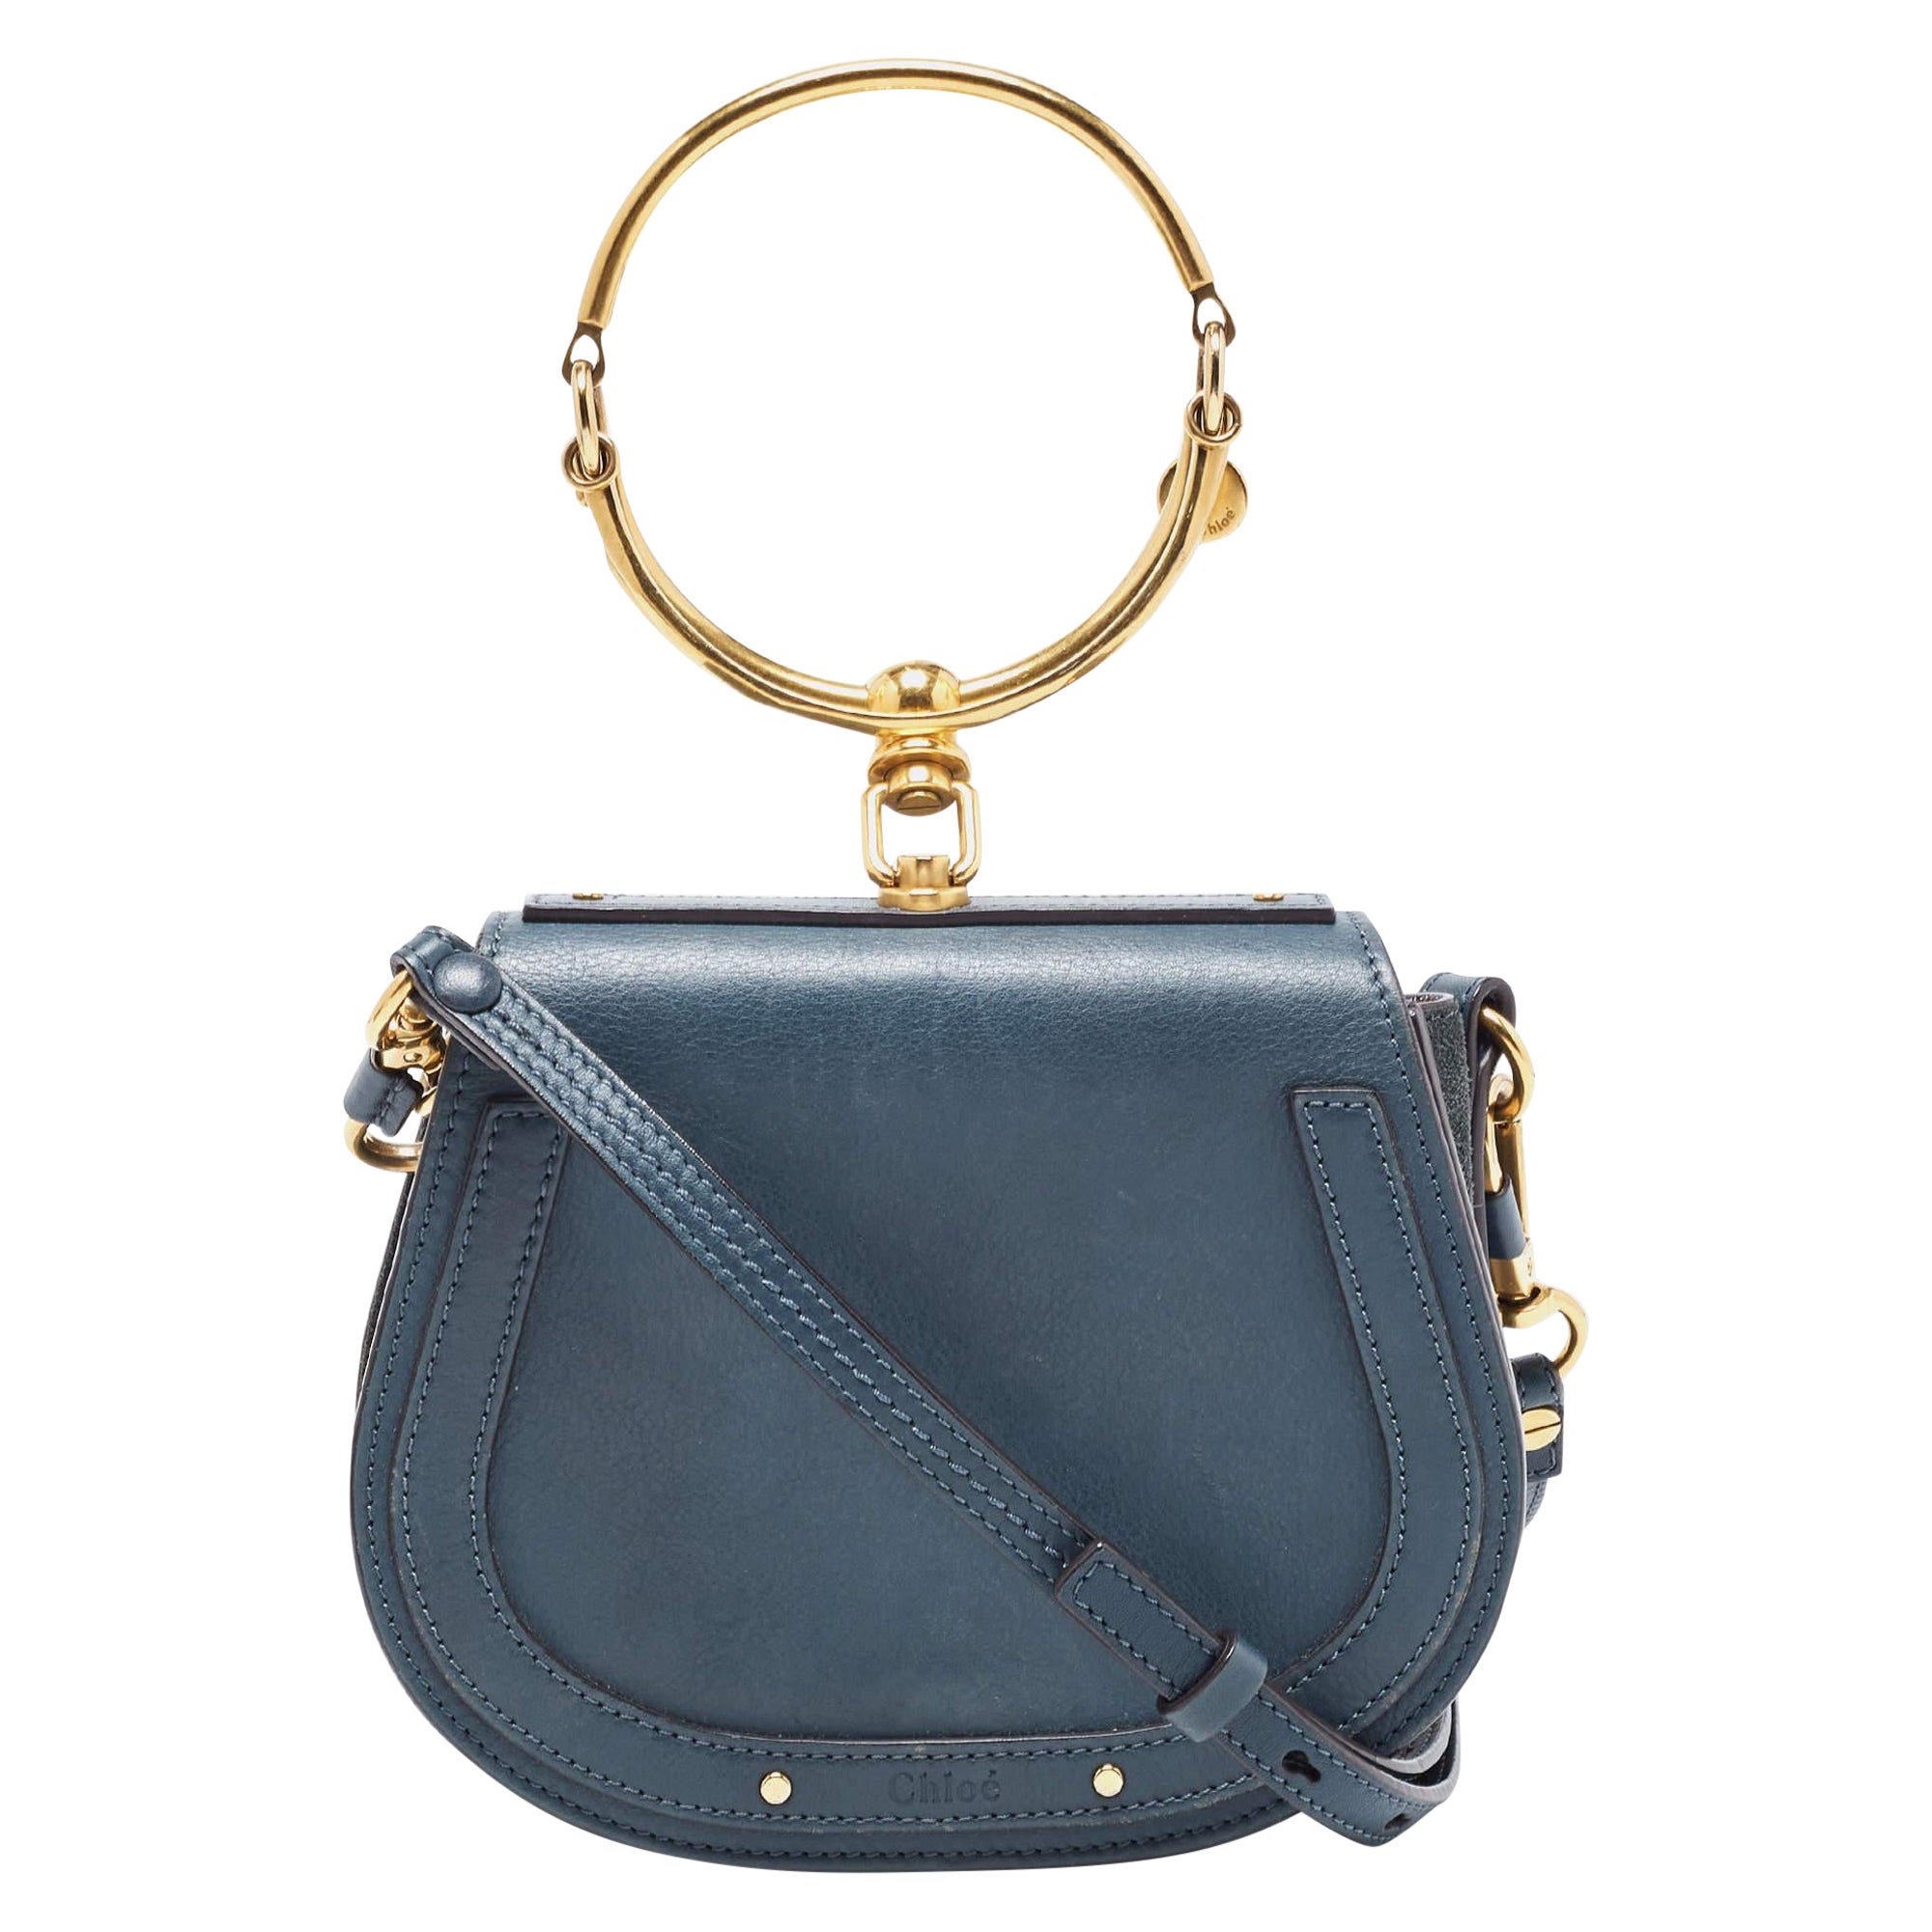 Chloe Teal Leather Small Nile Bracelet Crossbody Bag